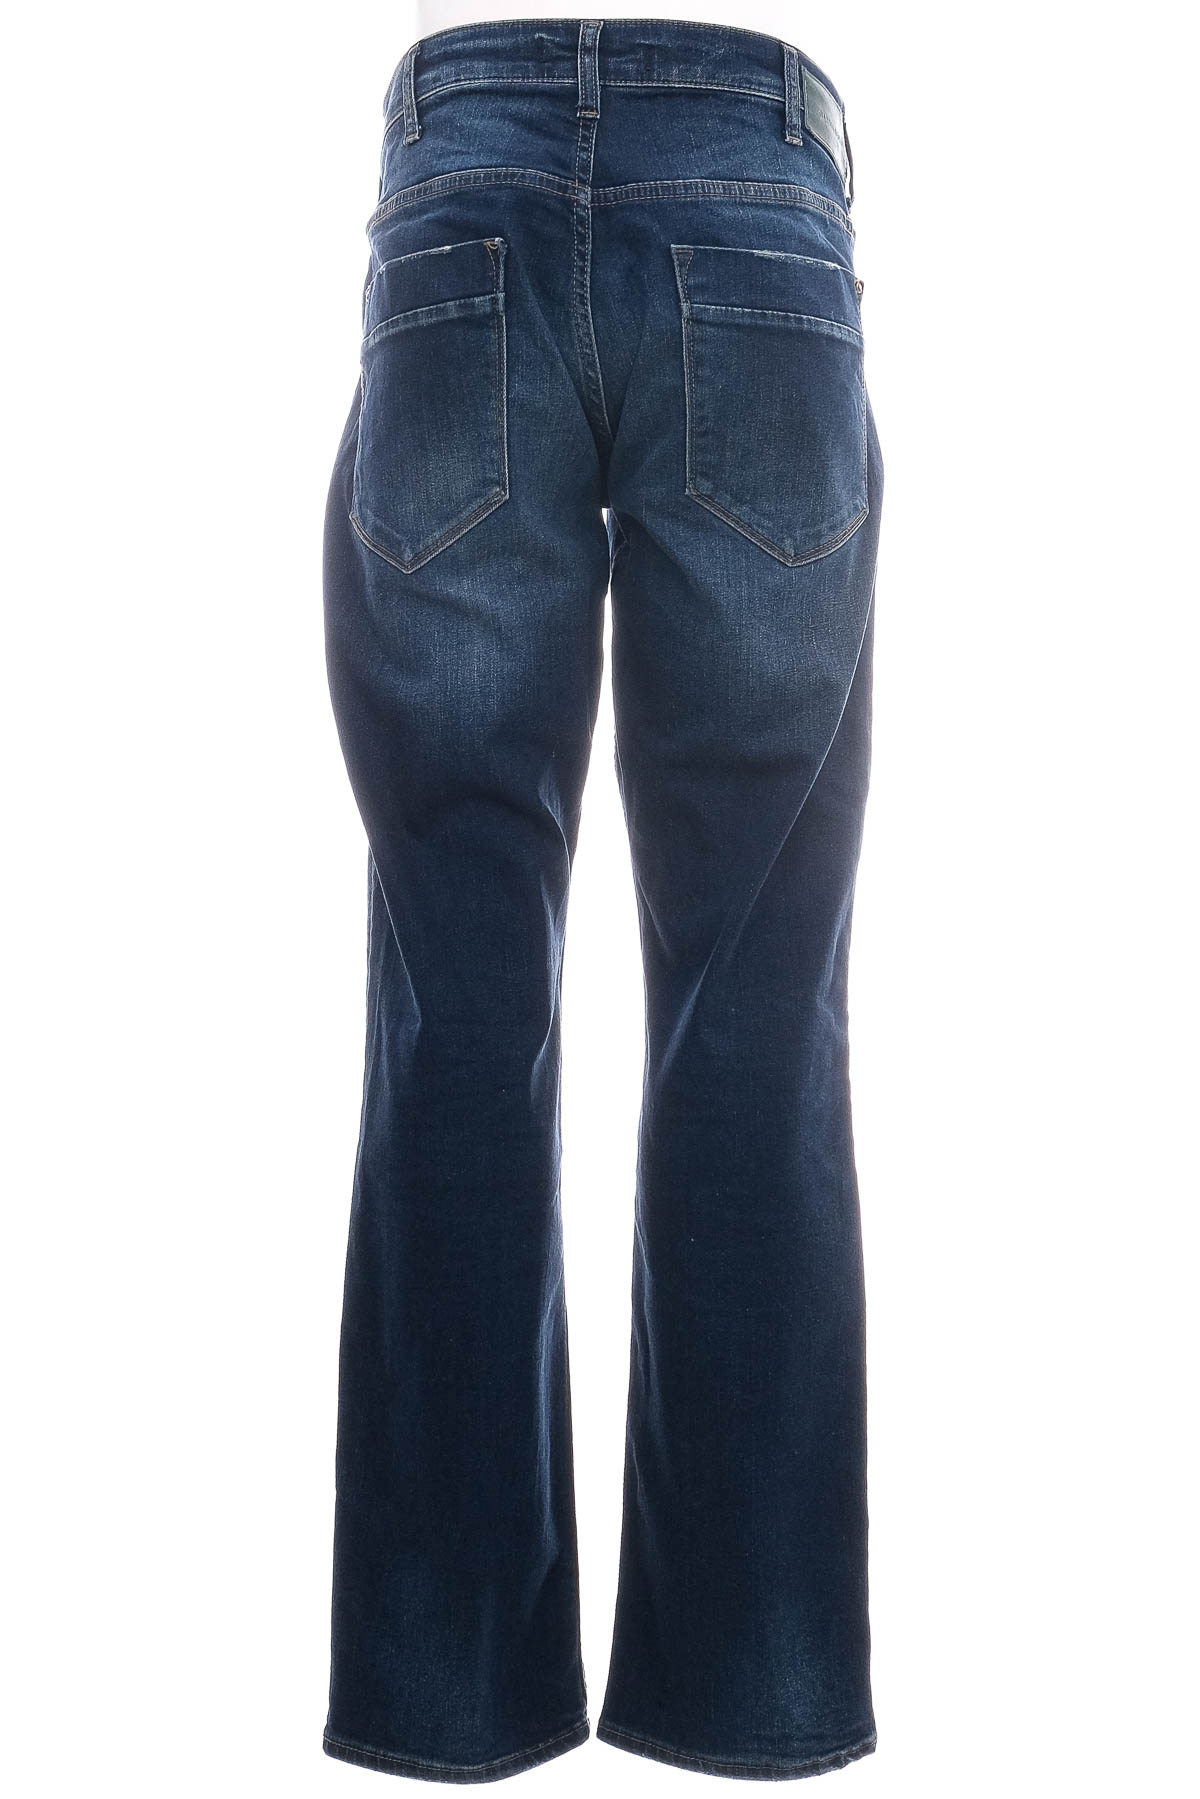 Men's jeans - GABBIA - 1